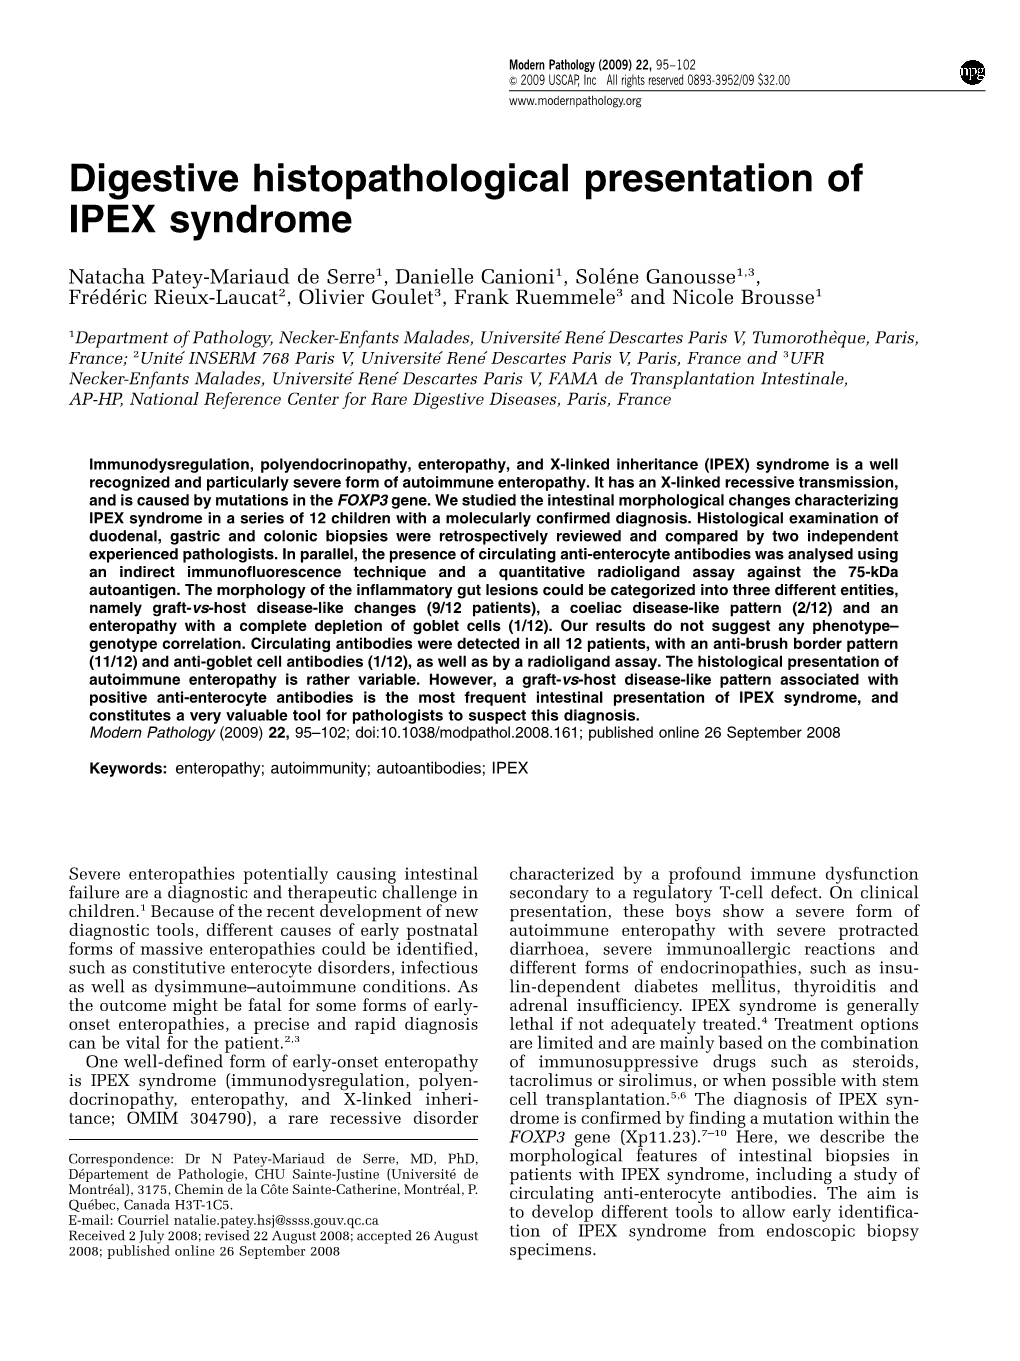 Digestive Histopathological Presentation of IPEX Syndrome